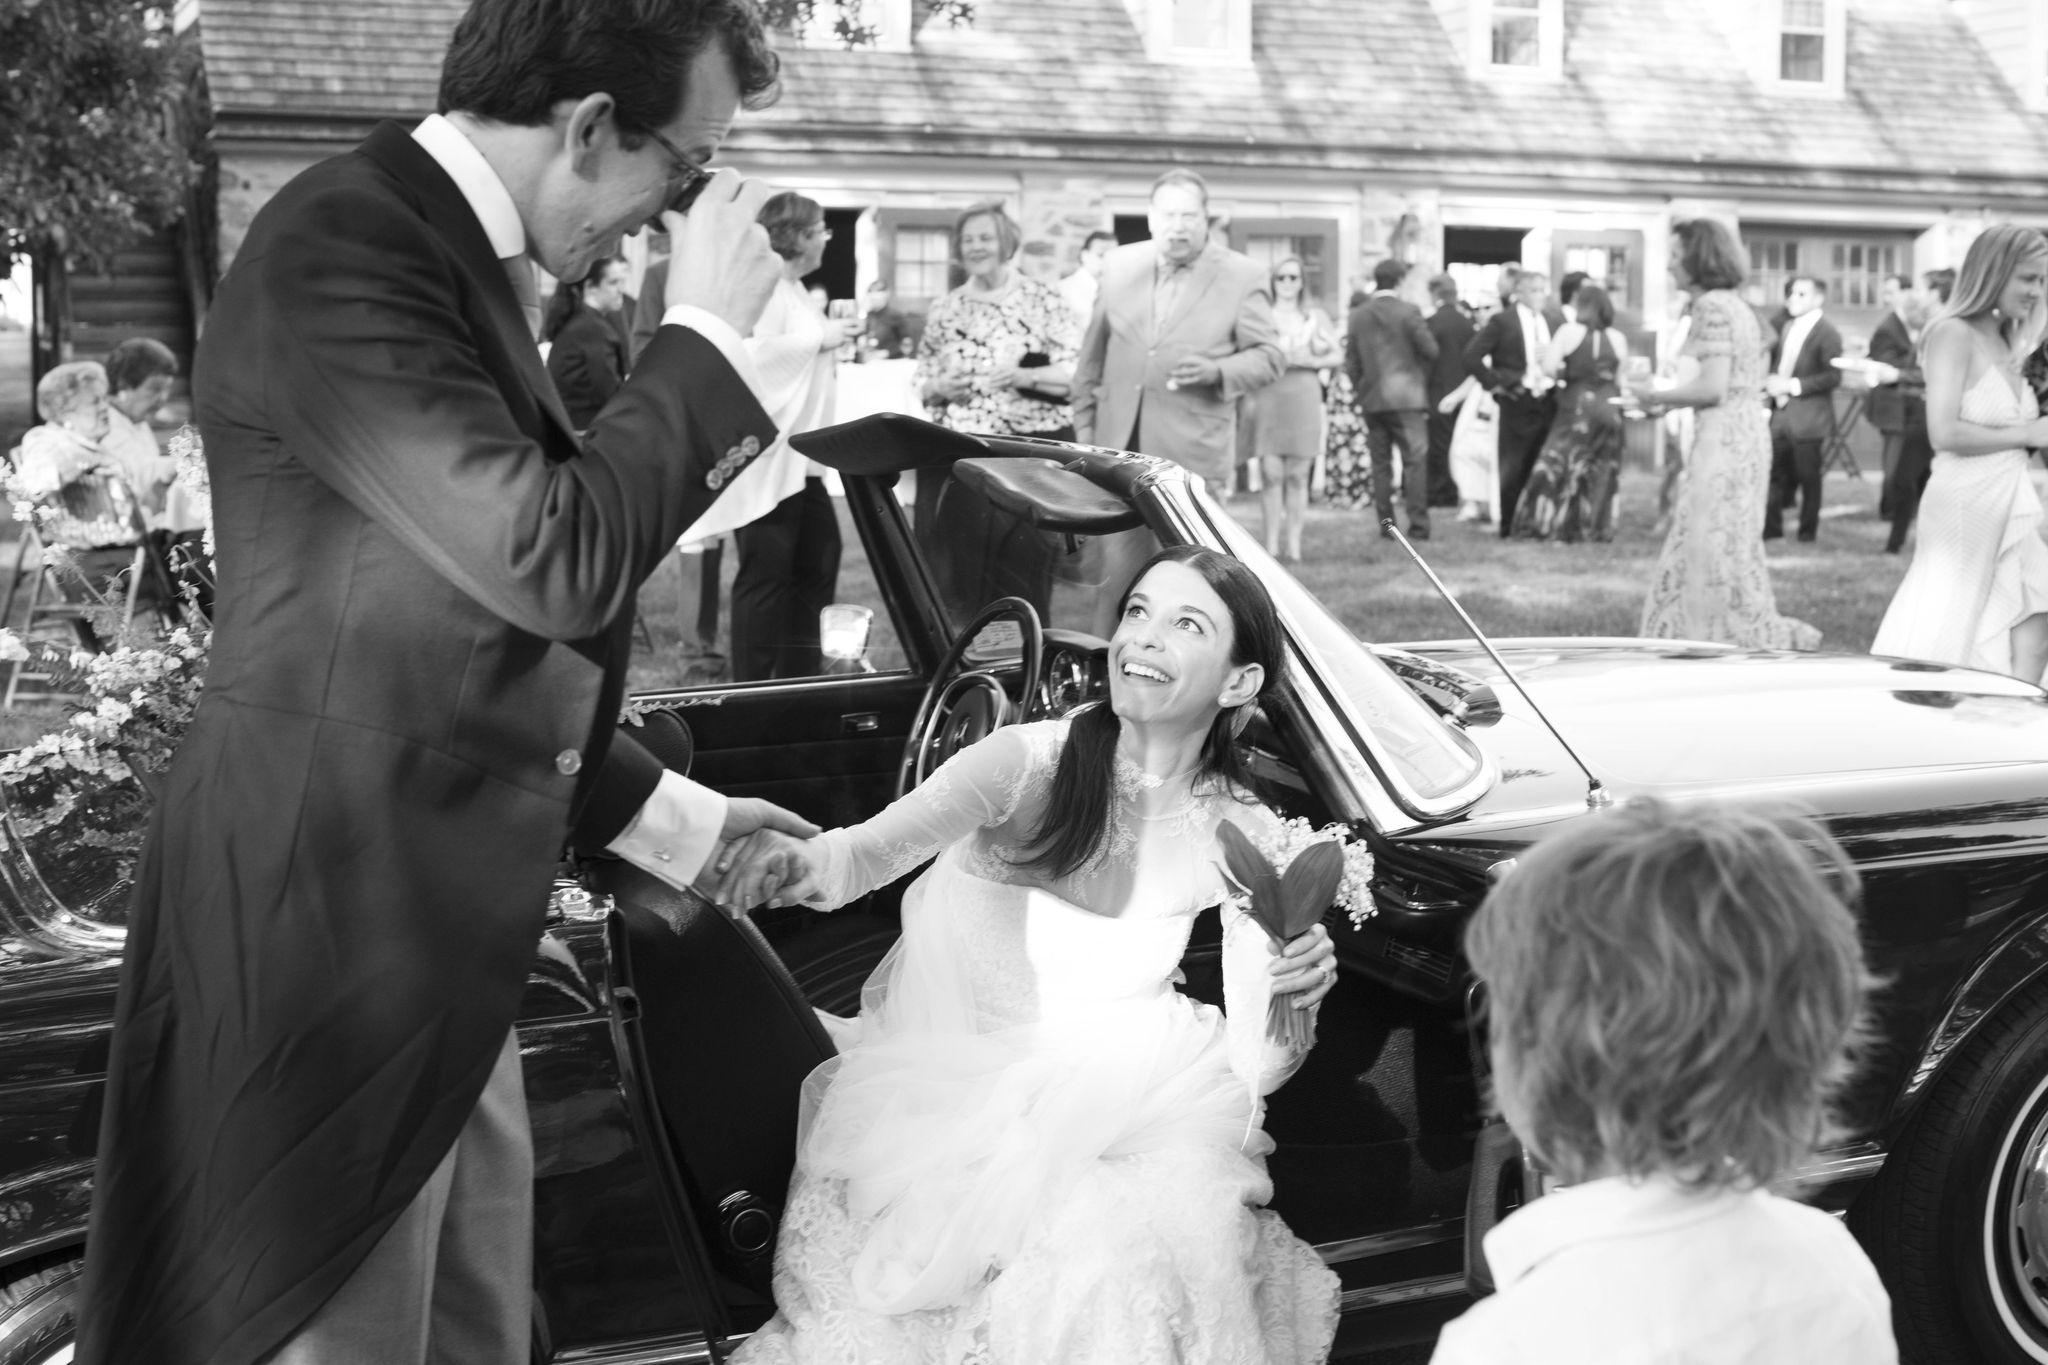 Photograph, Vehicle, Car, Luxury vehicle, Snapshot, Gown, Dress, Bride, Ceremony, Event, 